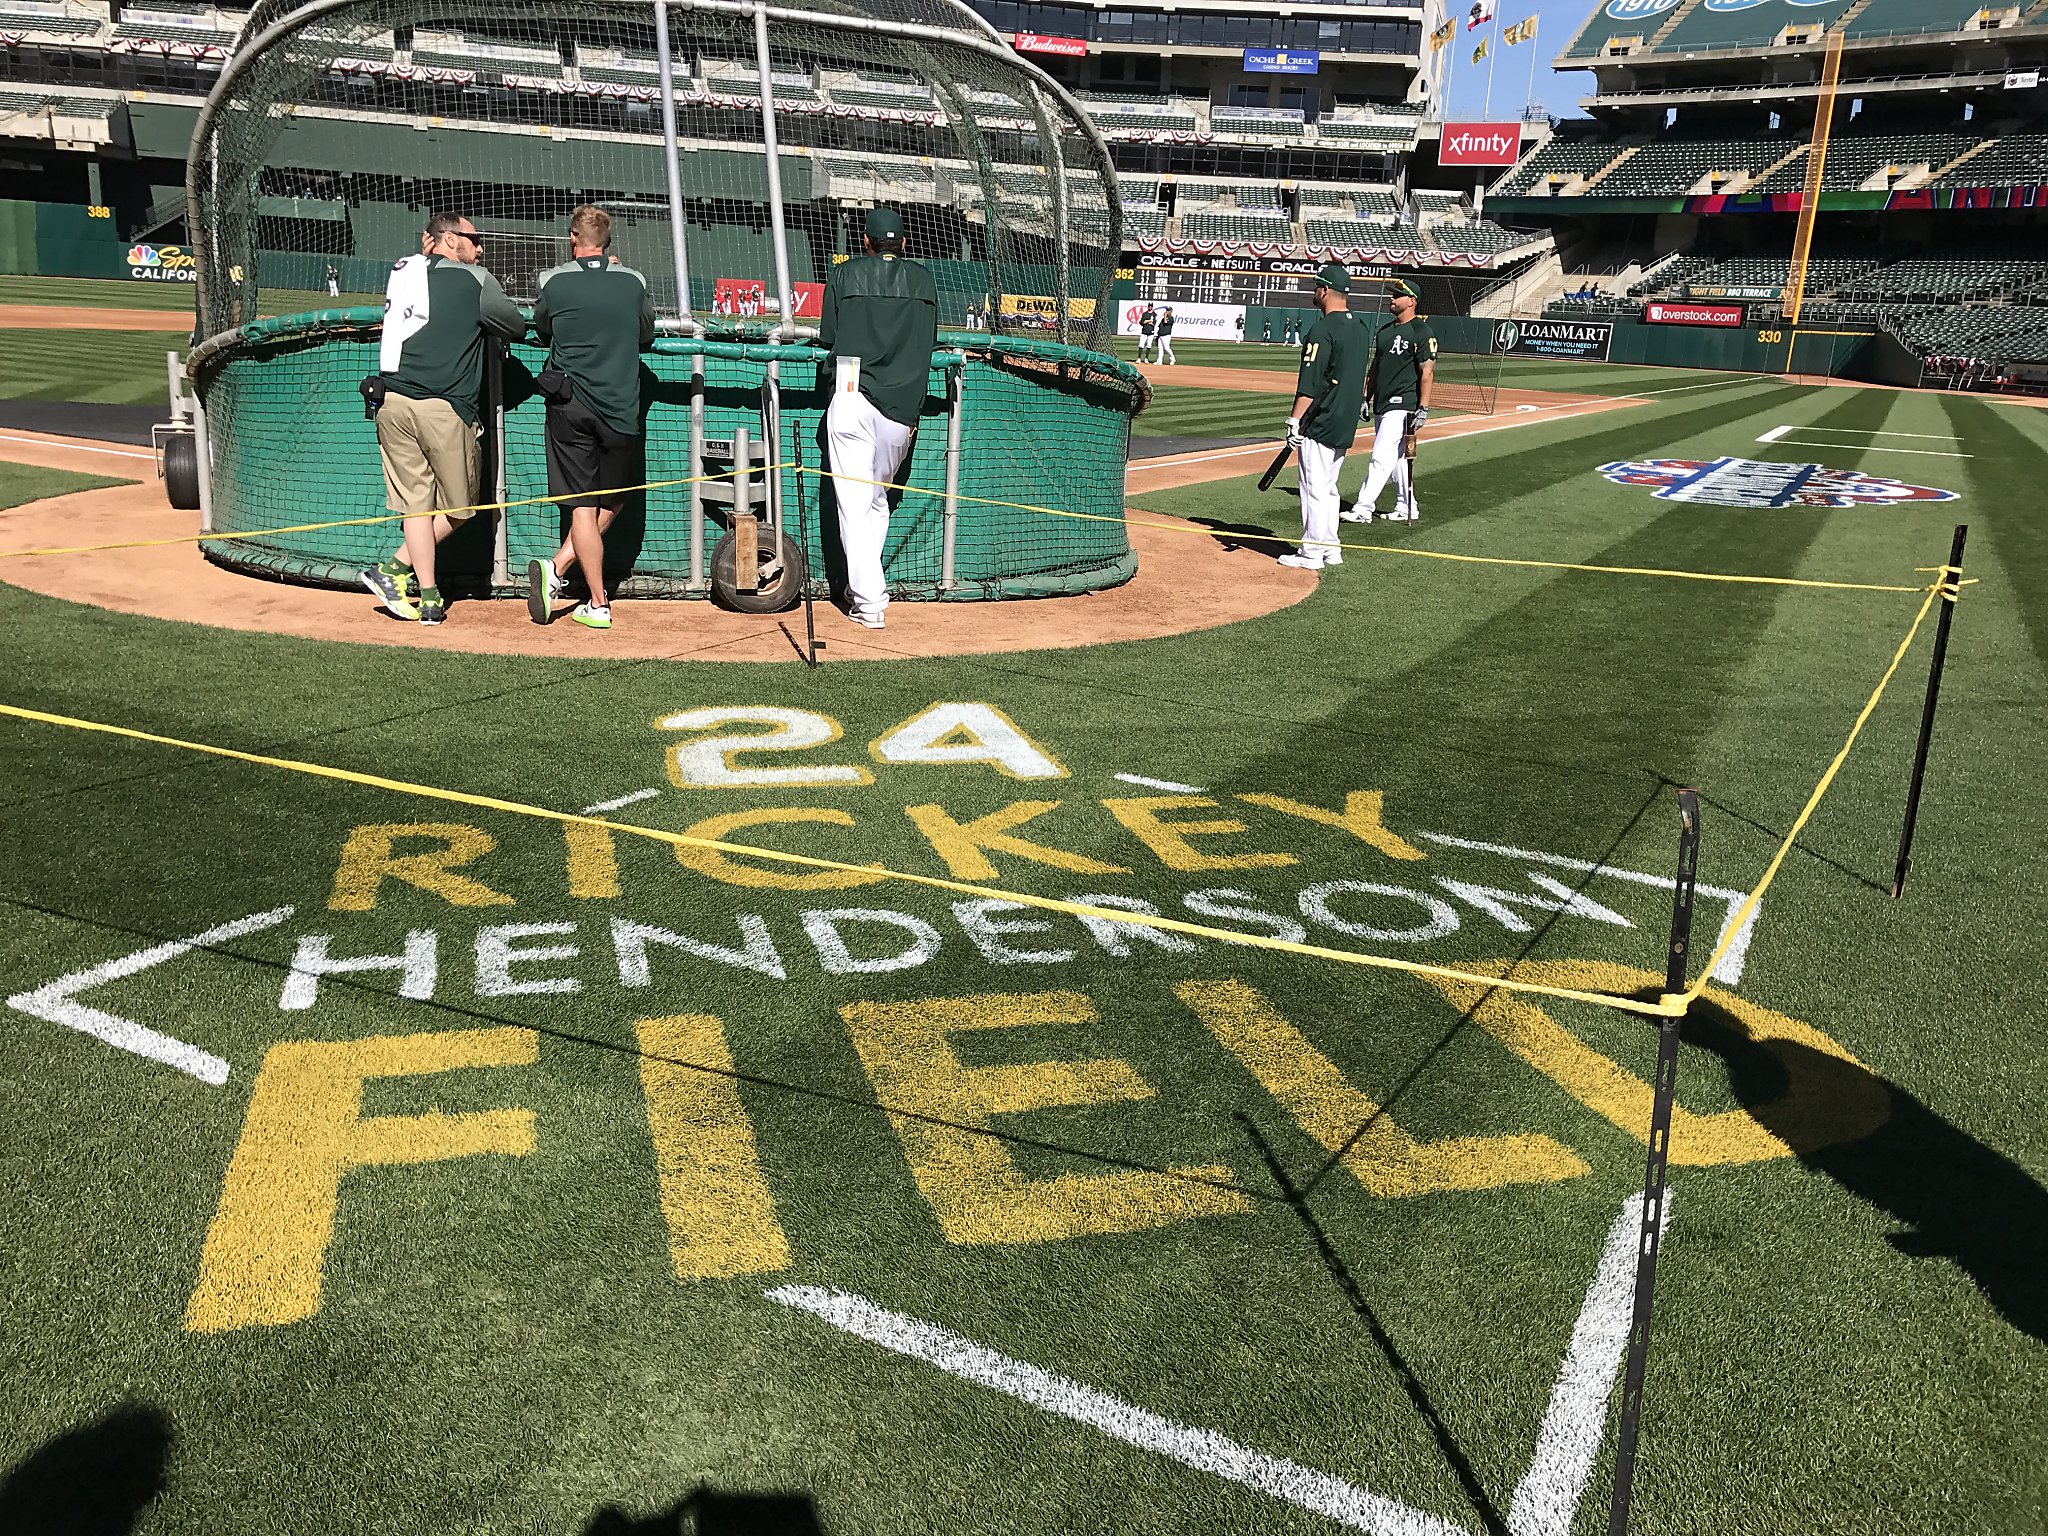 Rickey Henderson: Oakland's Own's Hall Of Famer And Baseball